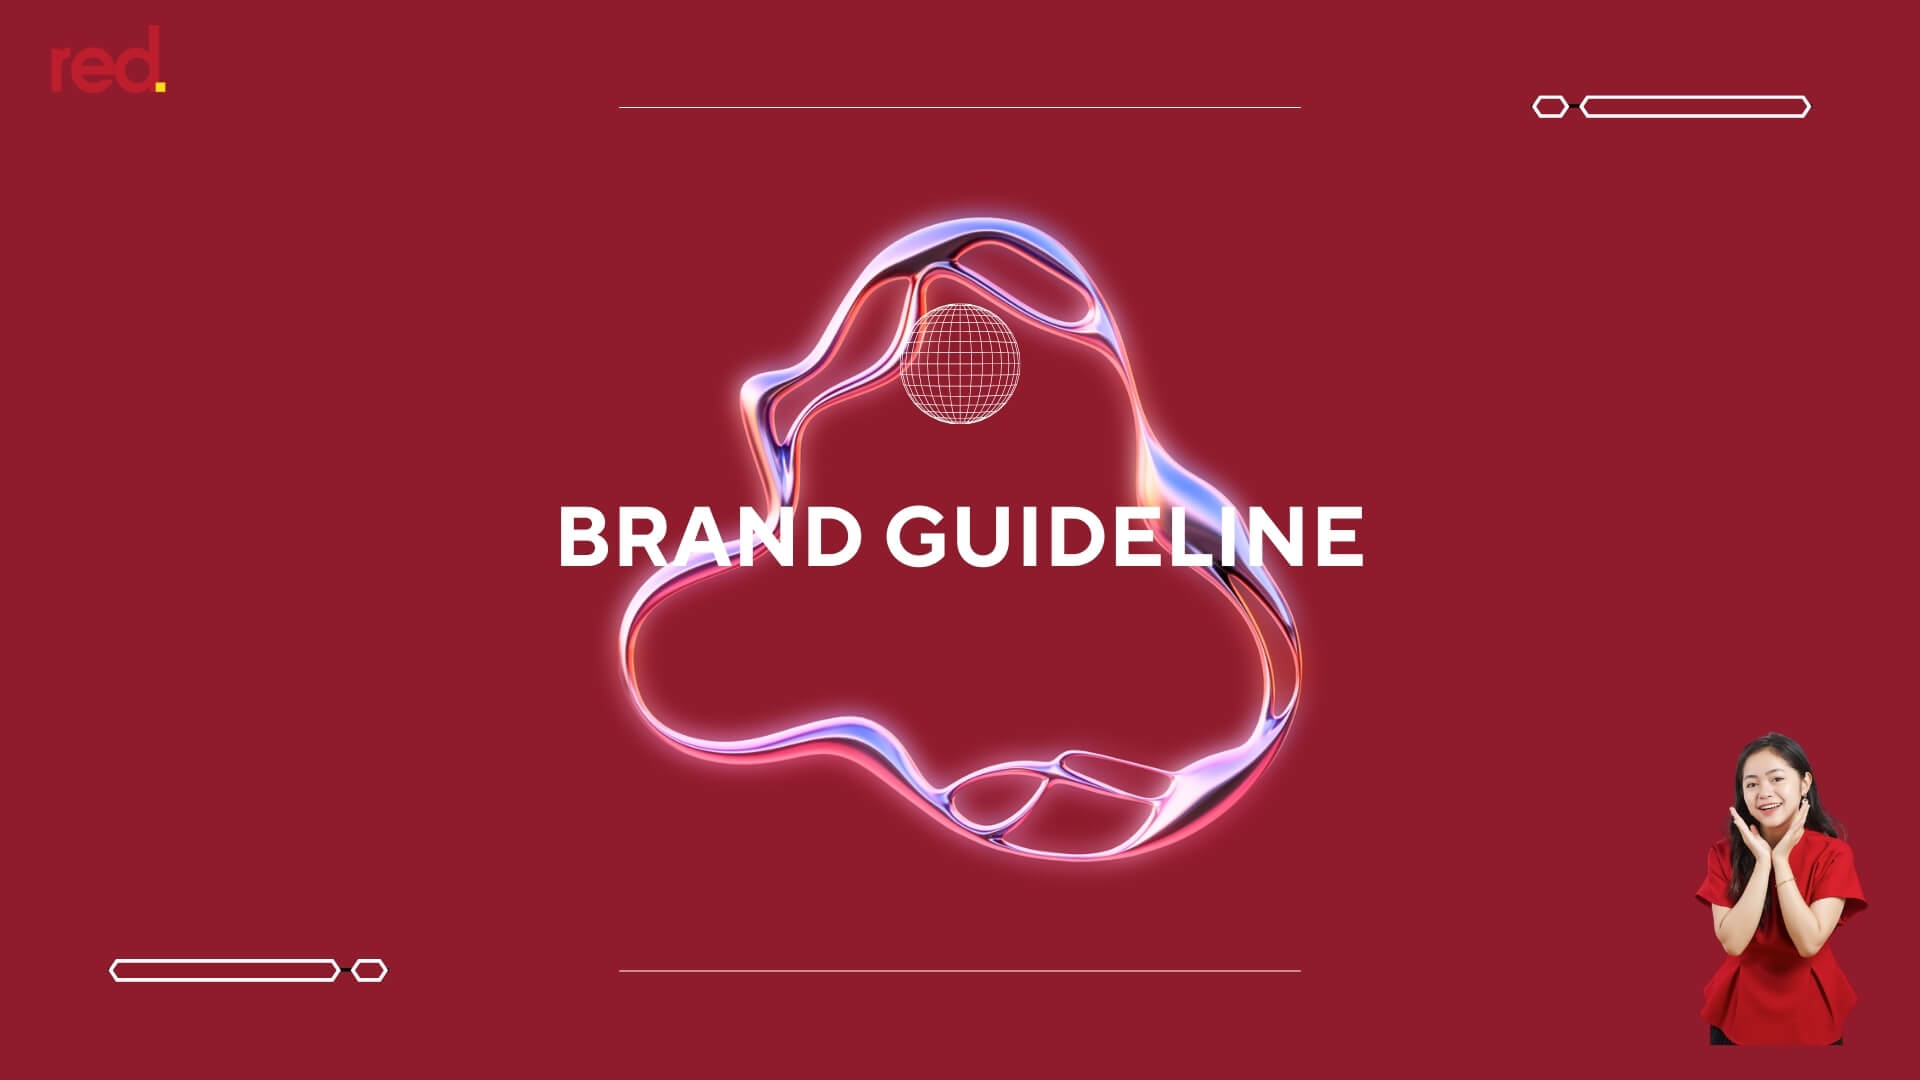 Brand guideline